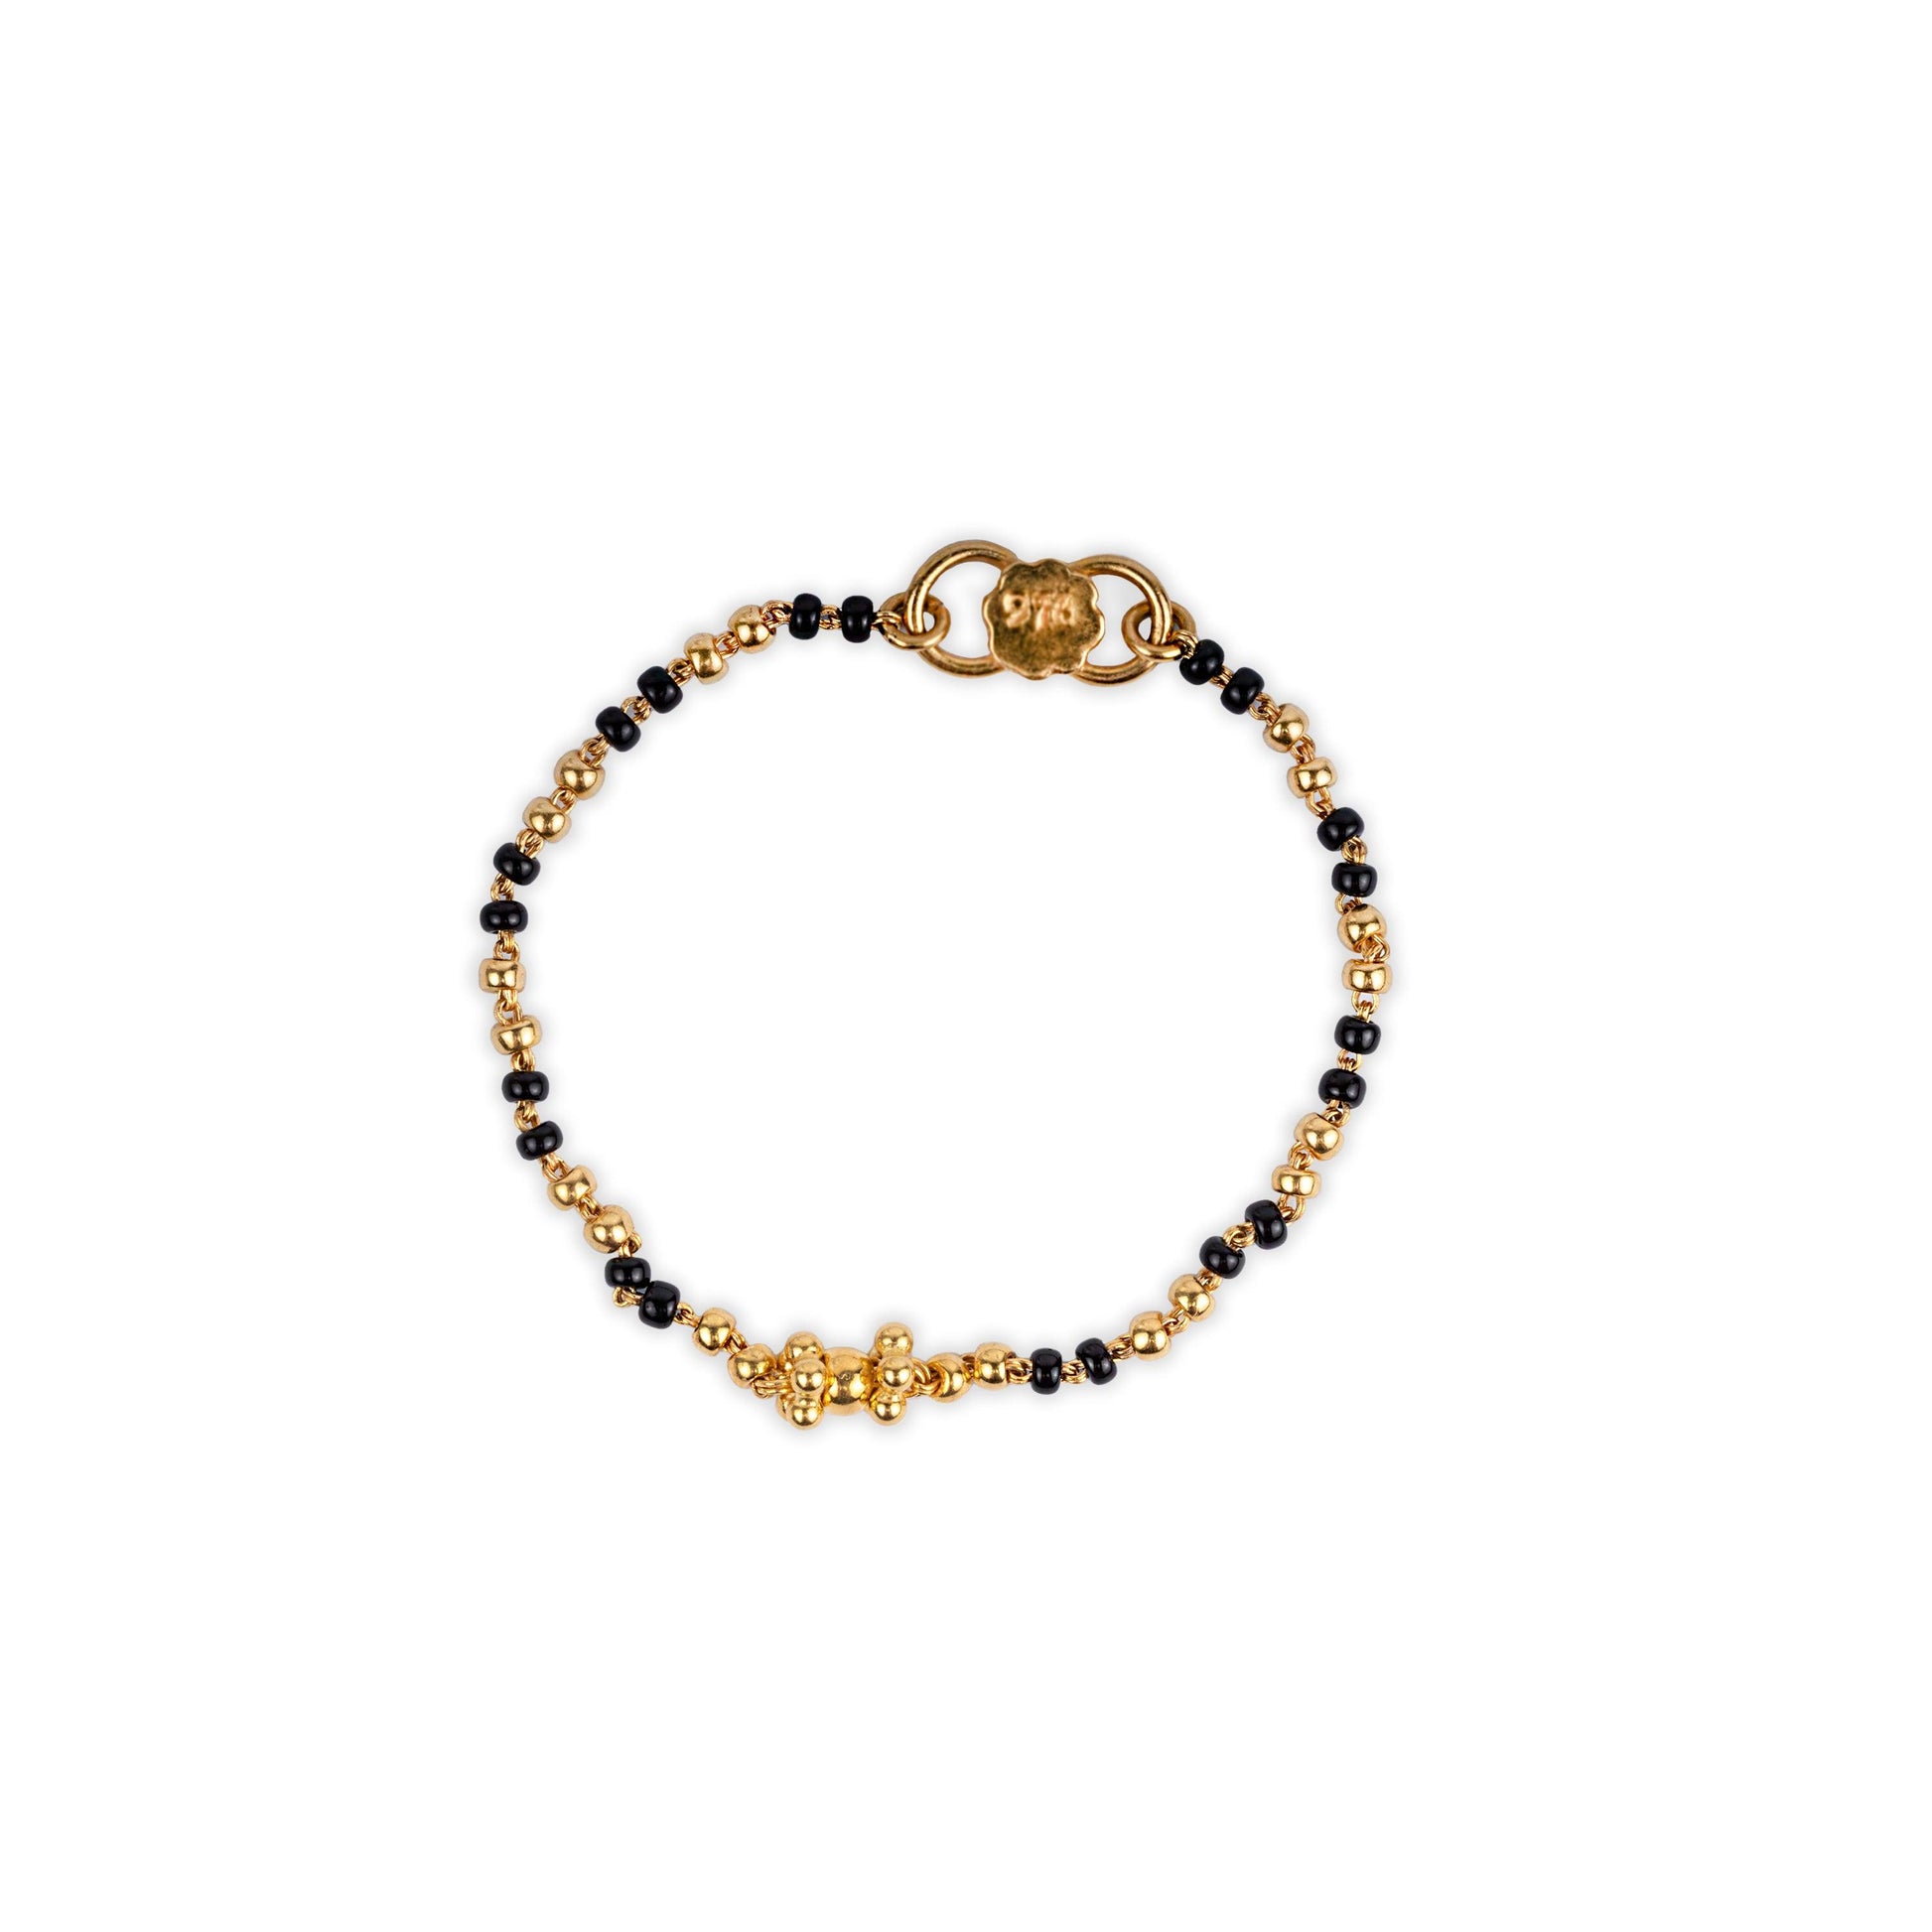 22ct Gold Children's Bracelets with Black Beads CBR-7836 - Minar Jewellers